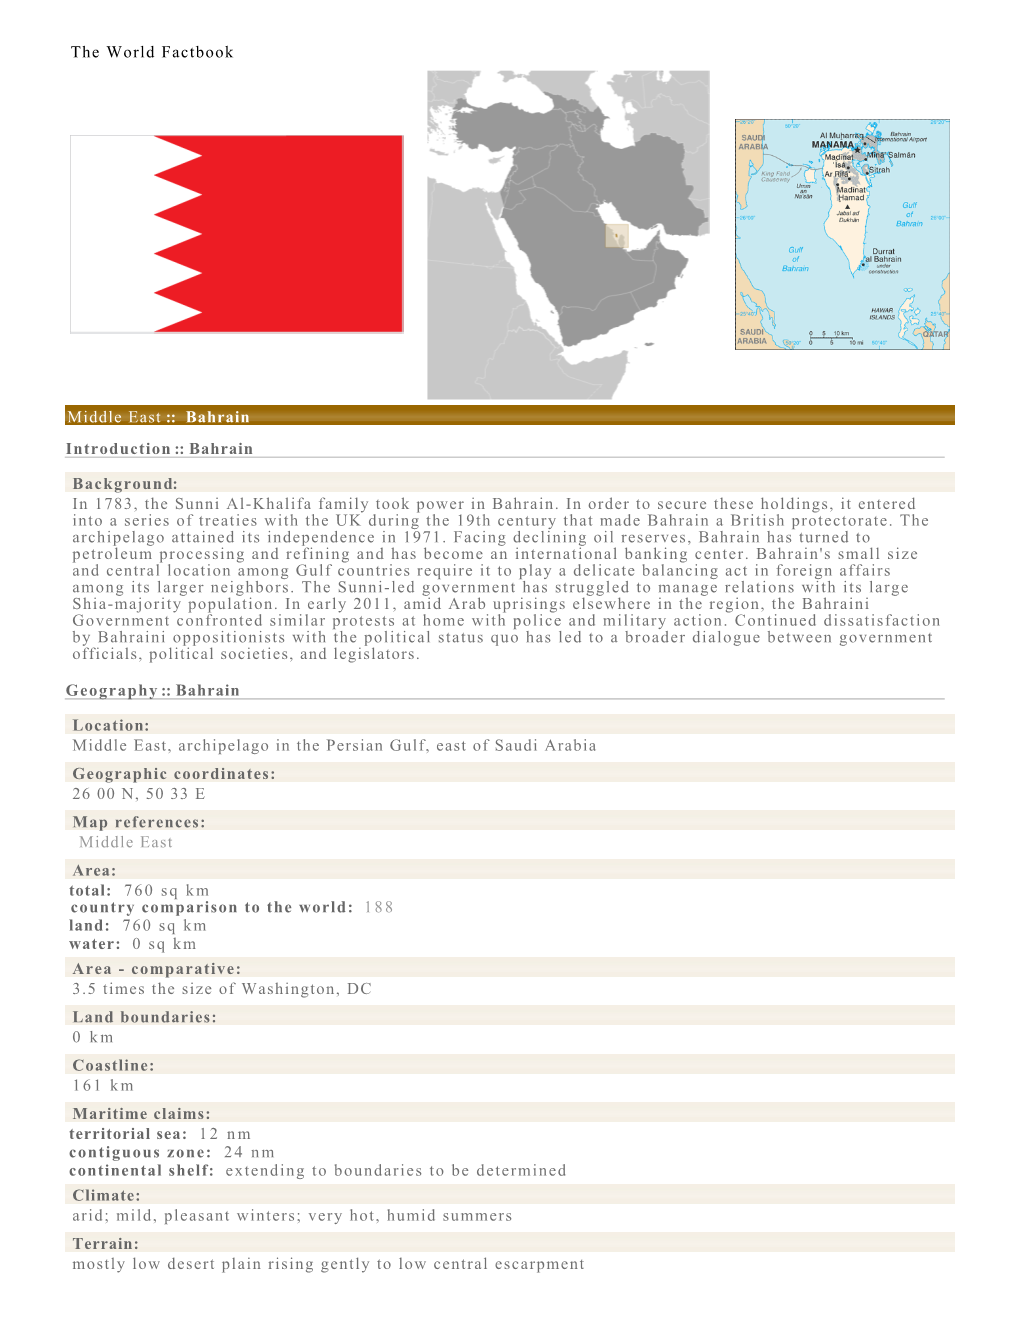 Bahrain Background